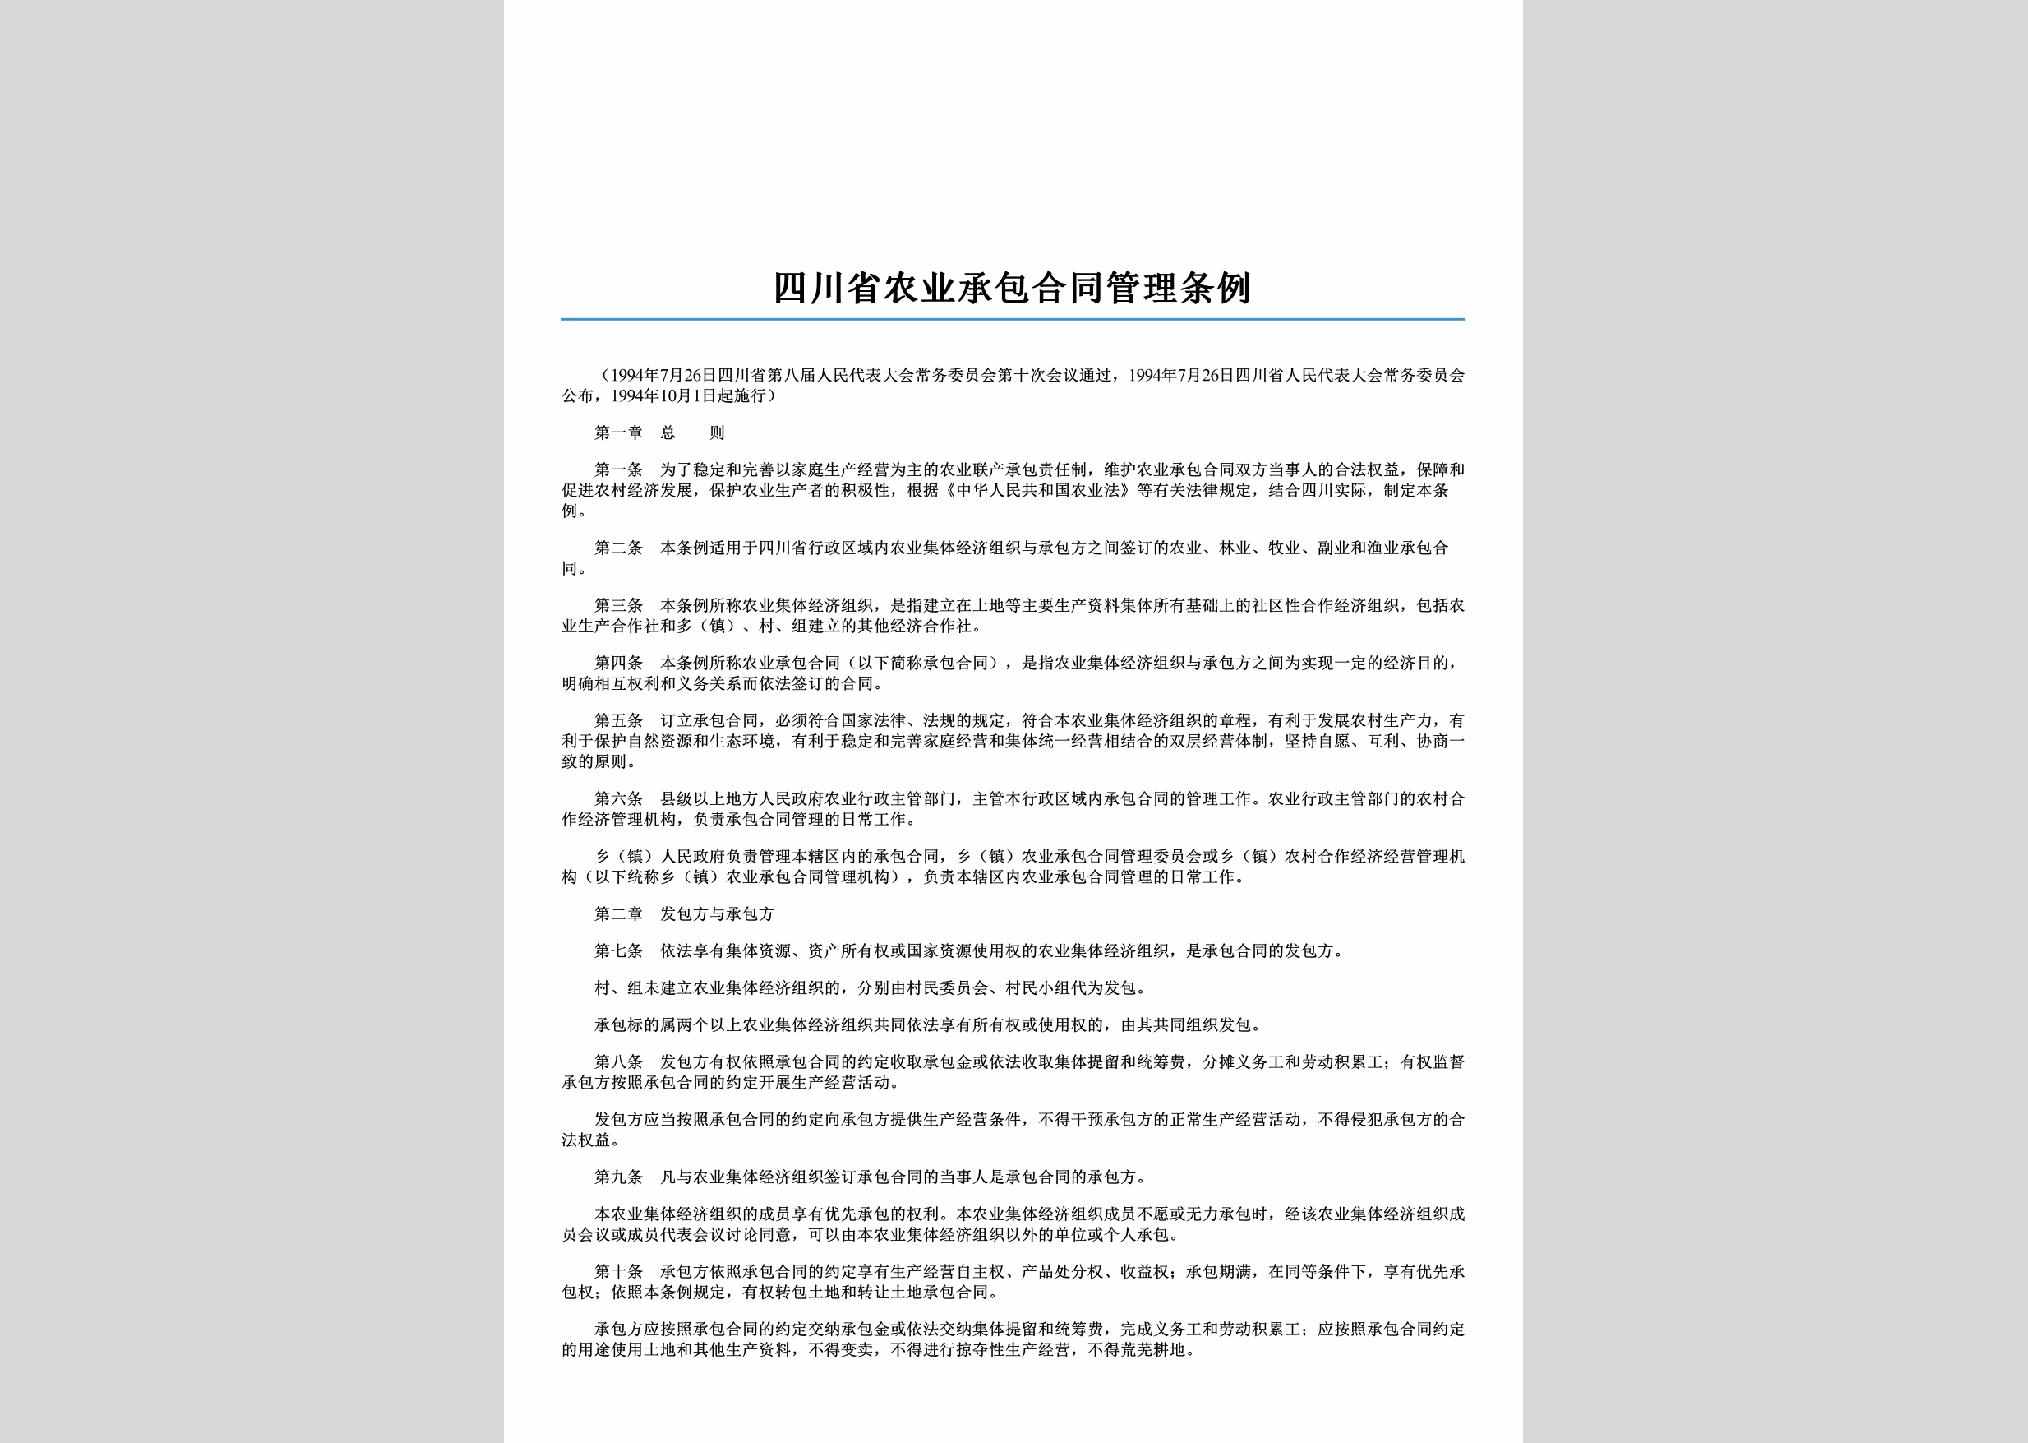 SC-NYCBHTTL-1994：四川省农业承包合同管理条例